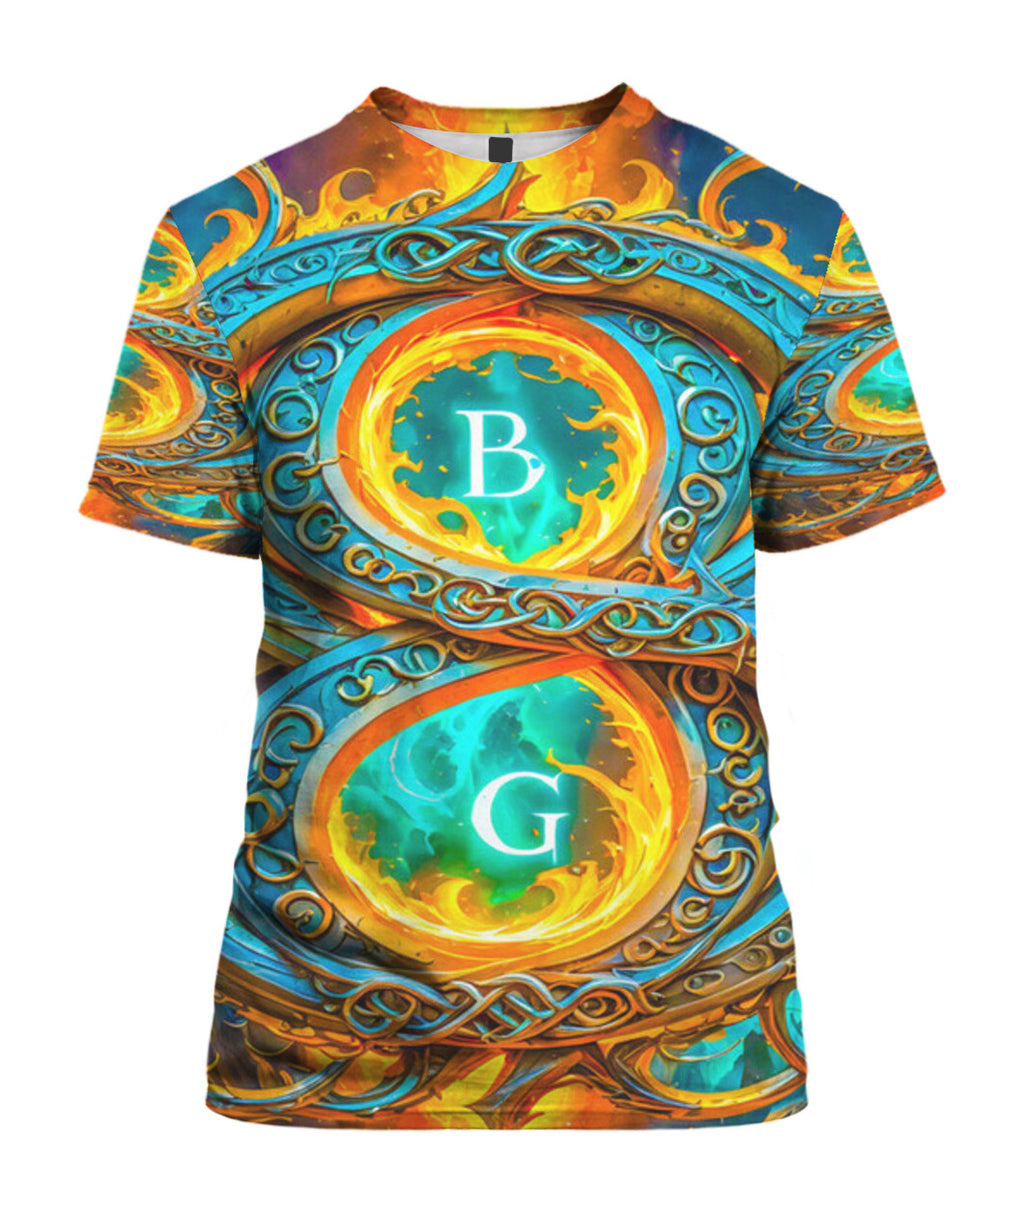 BG Number 8 Unisex T-Shirt by Burning Guitars